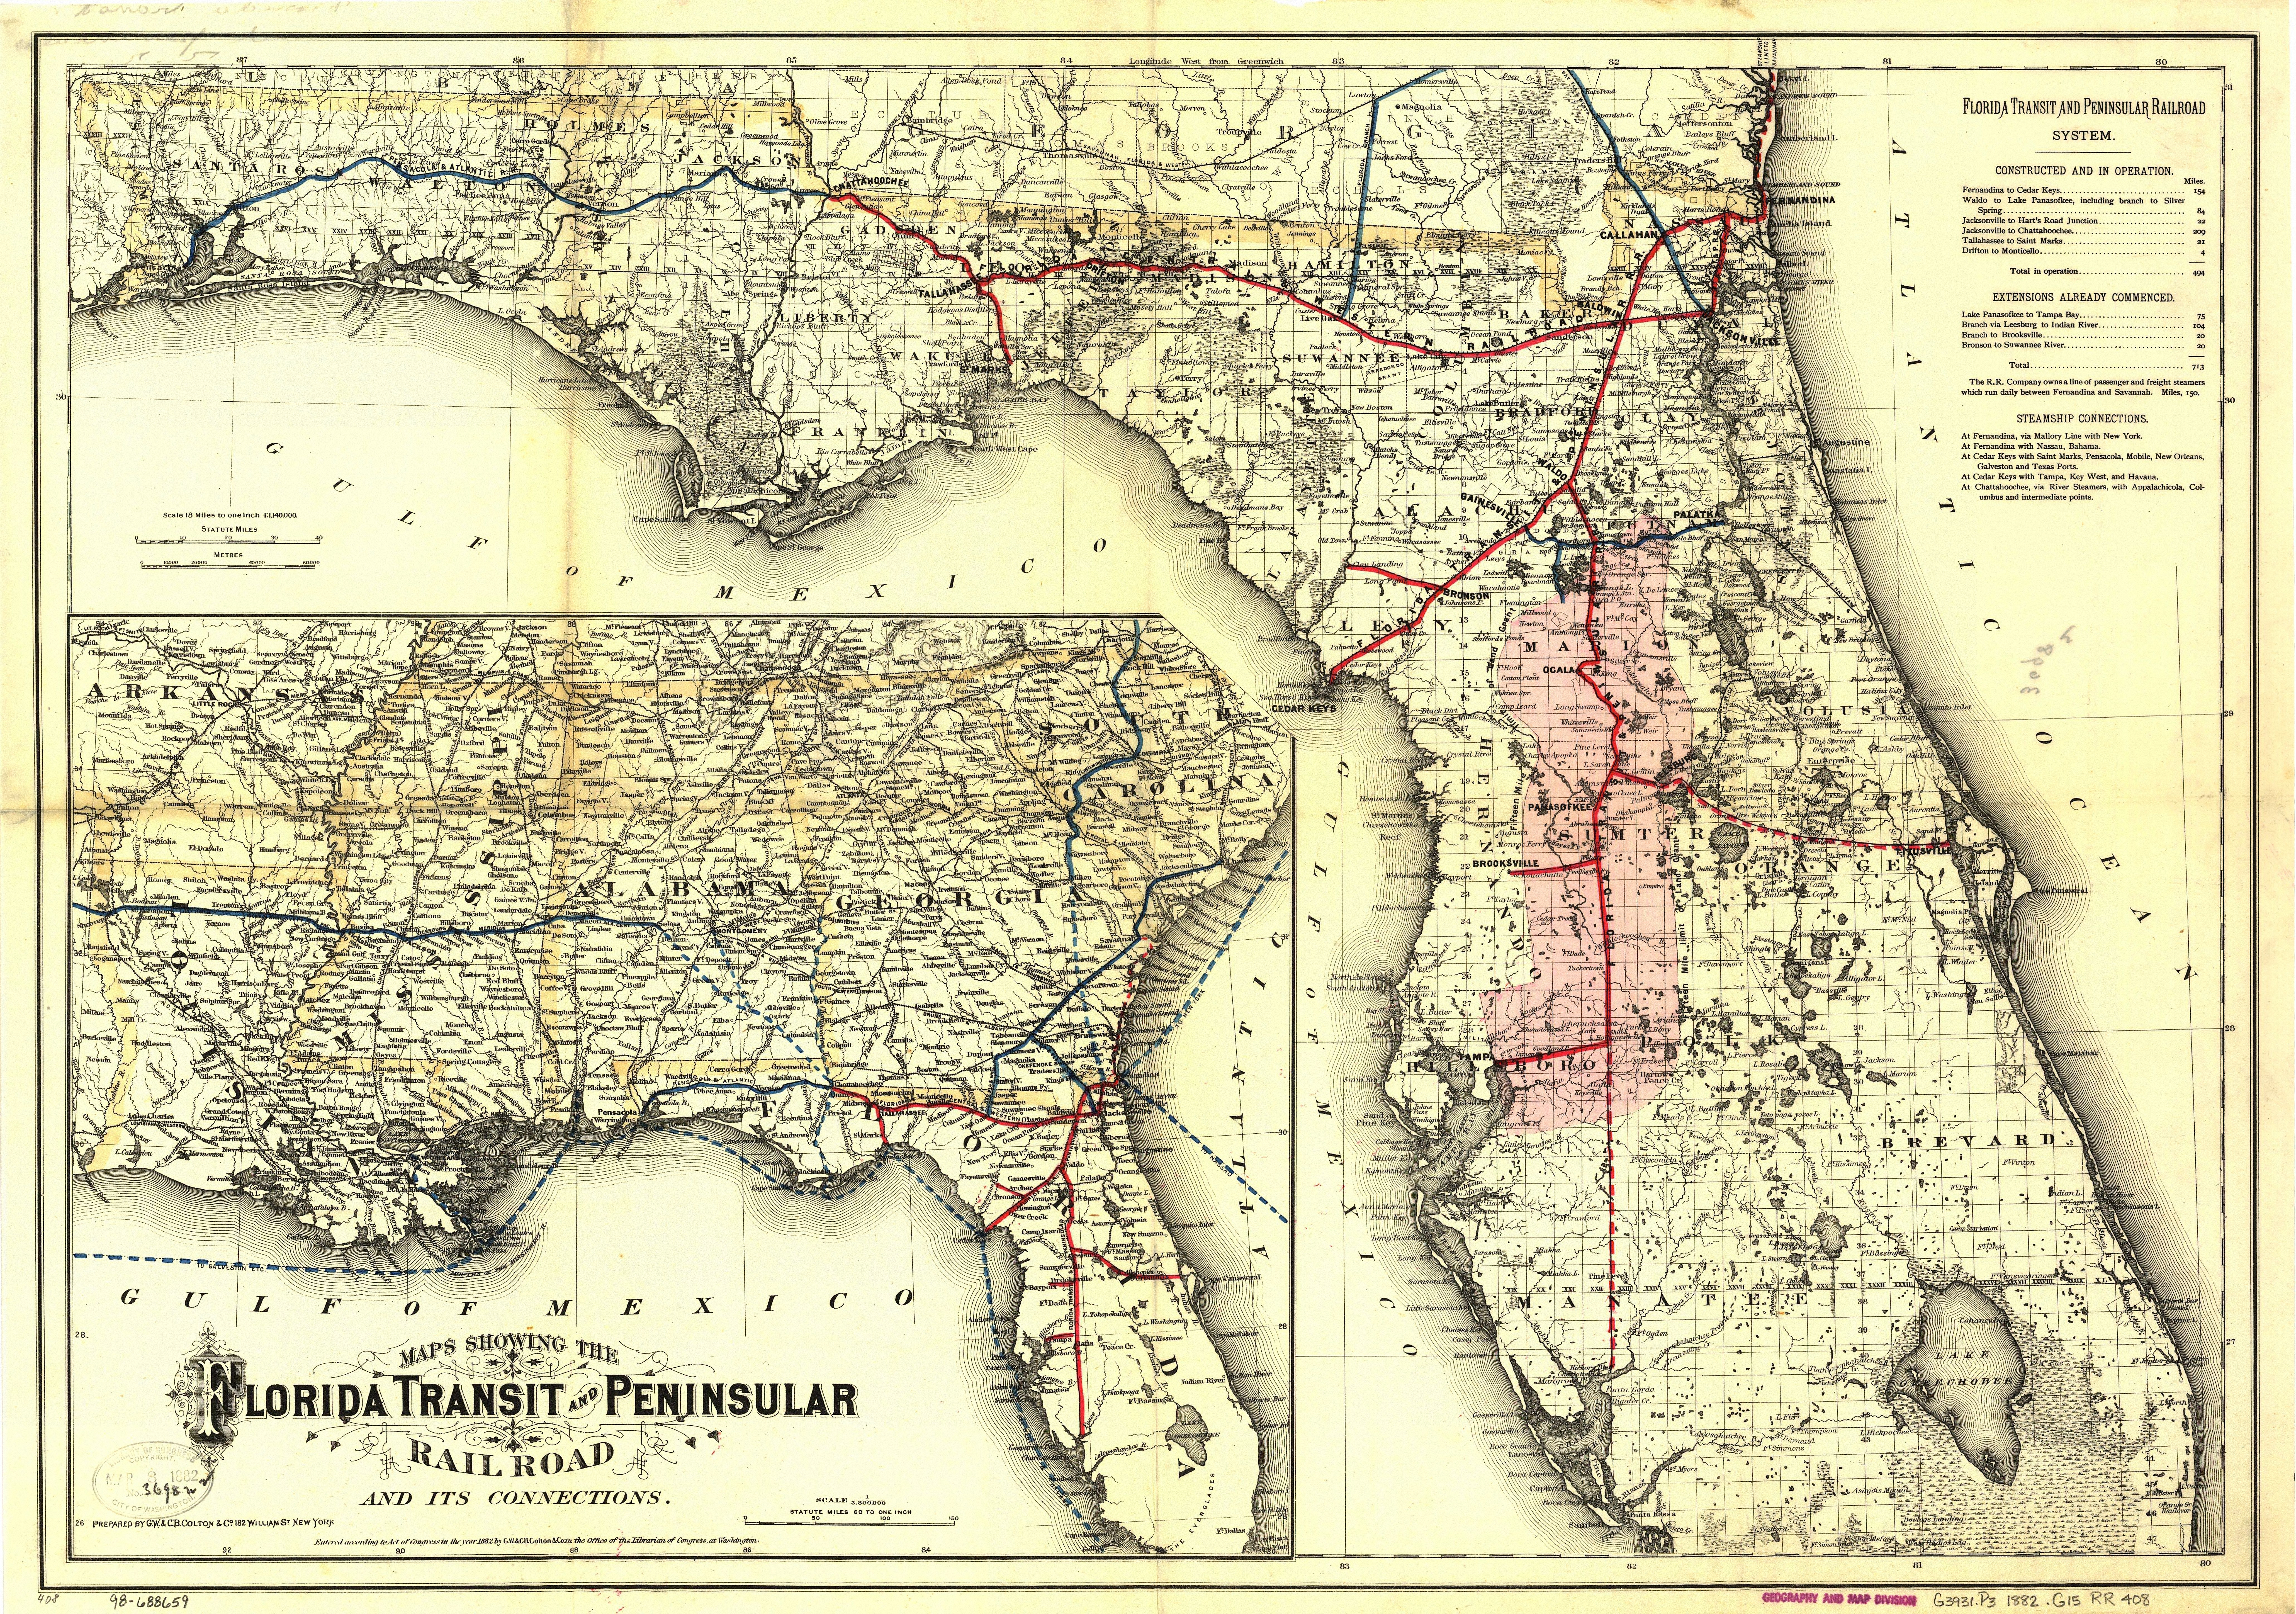 Florida Central And Peninsular Railroad - Wikipedia - Yulee Florida Map